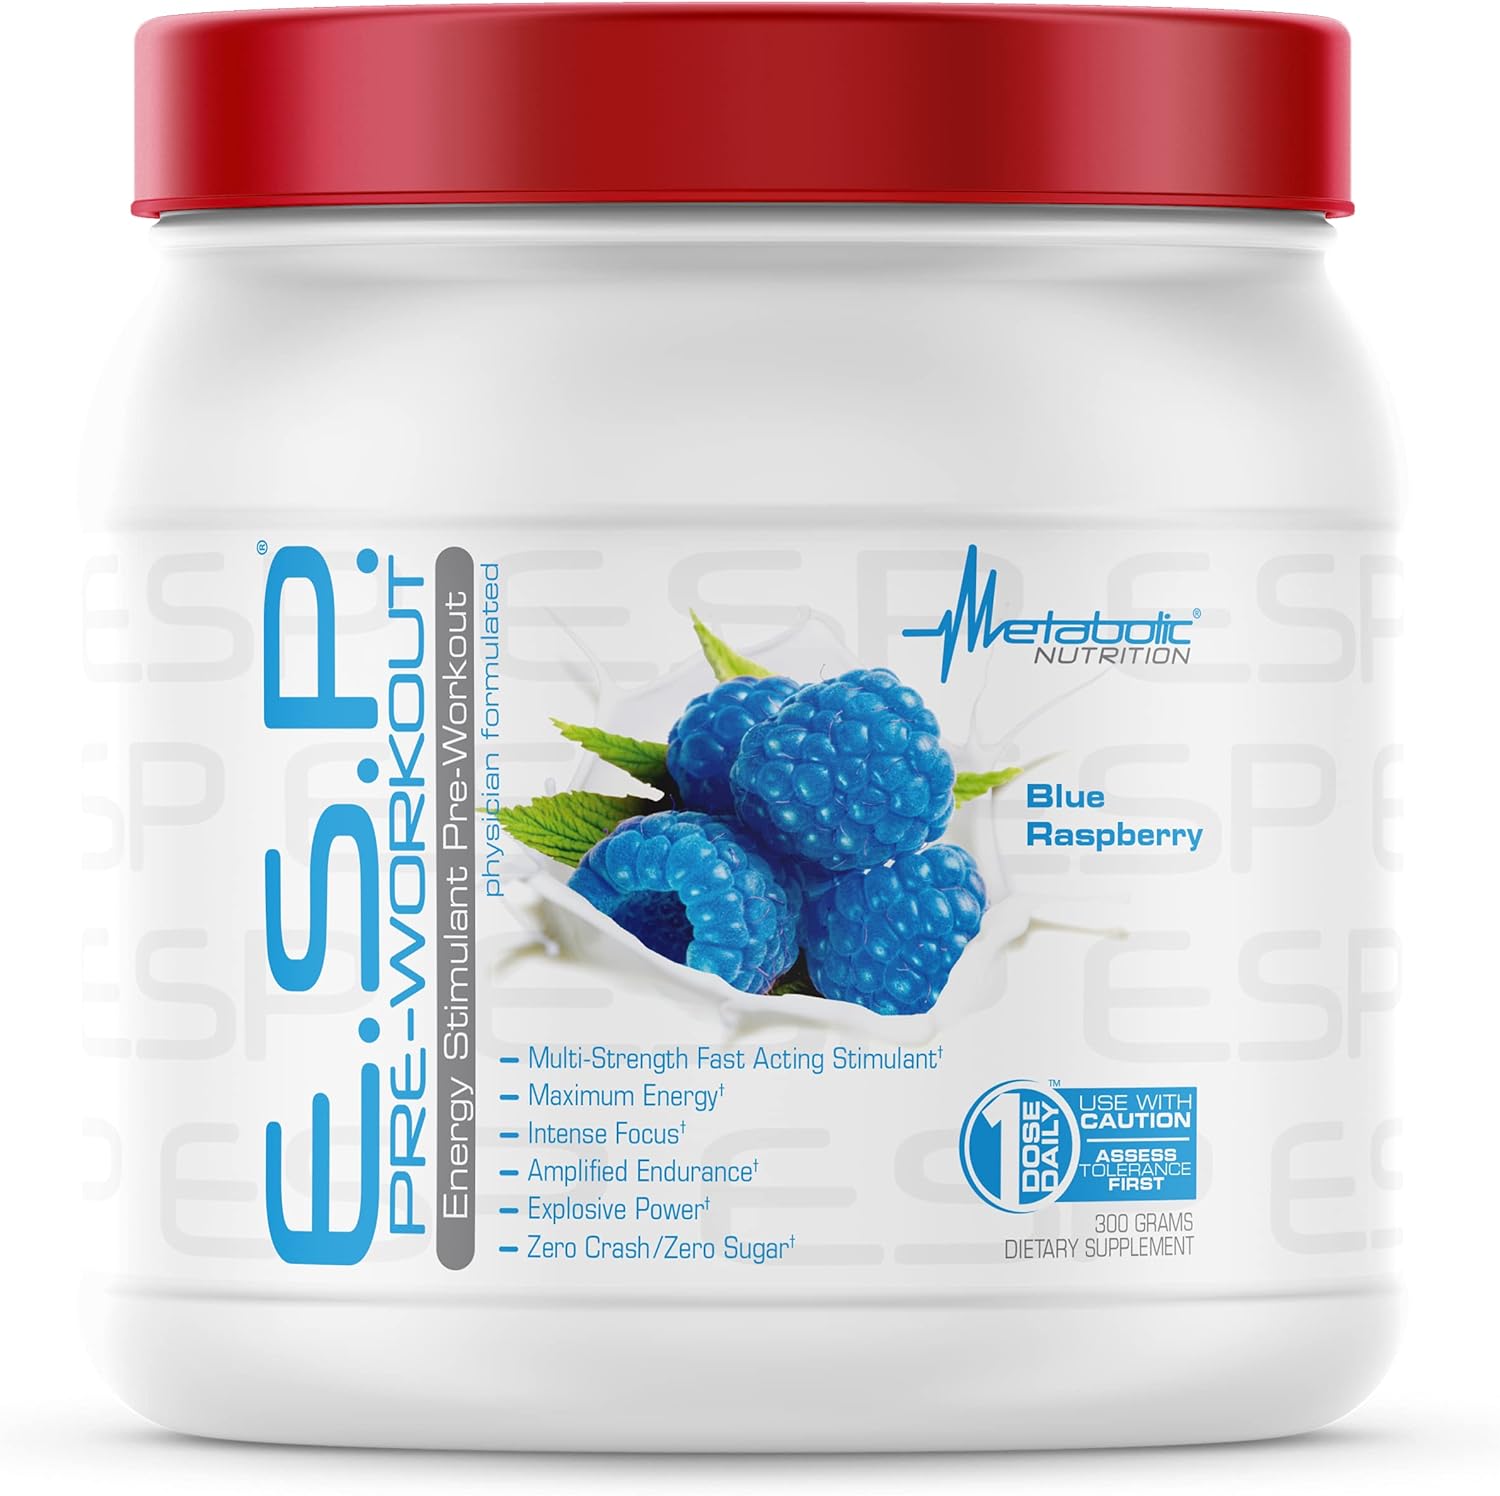 Metabolic Nutrition | ESP - Stimulating Pre Workout, Pre Intra Workout Supplement | Energy & Endurance Stimulating | Natural, Safe & Mental Focus | Blue Raspberry, 300 Grams (90 Servings)